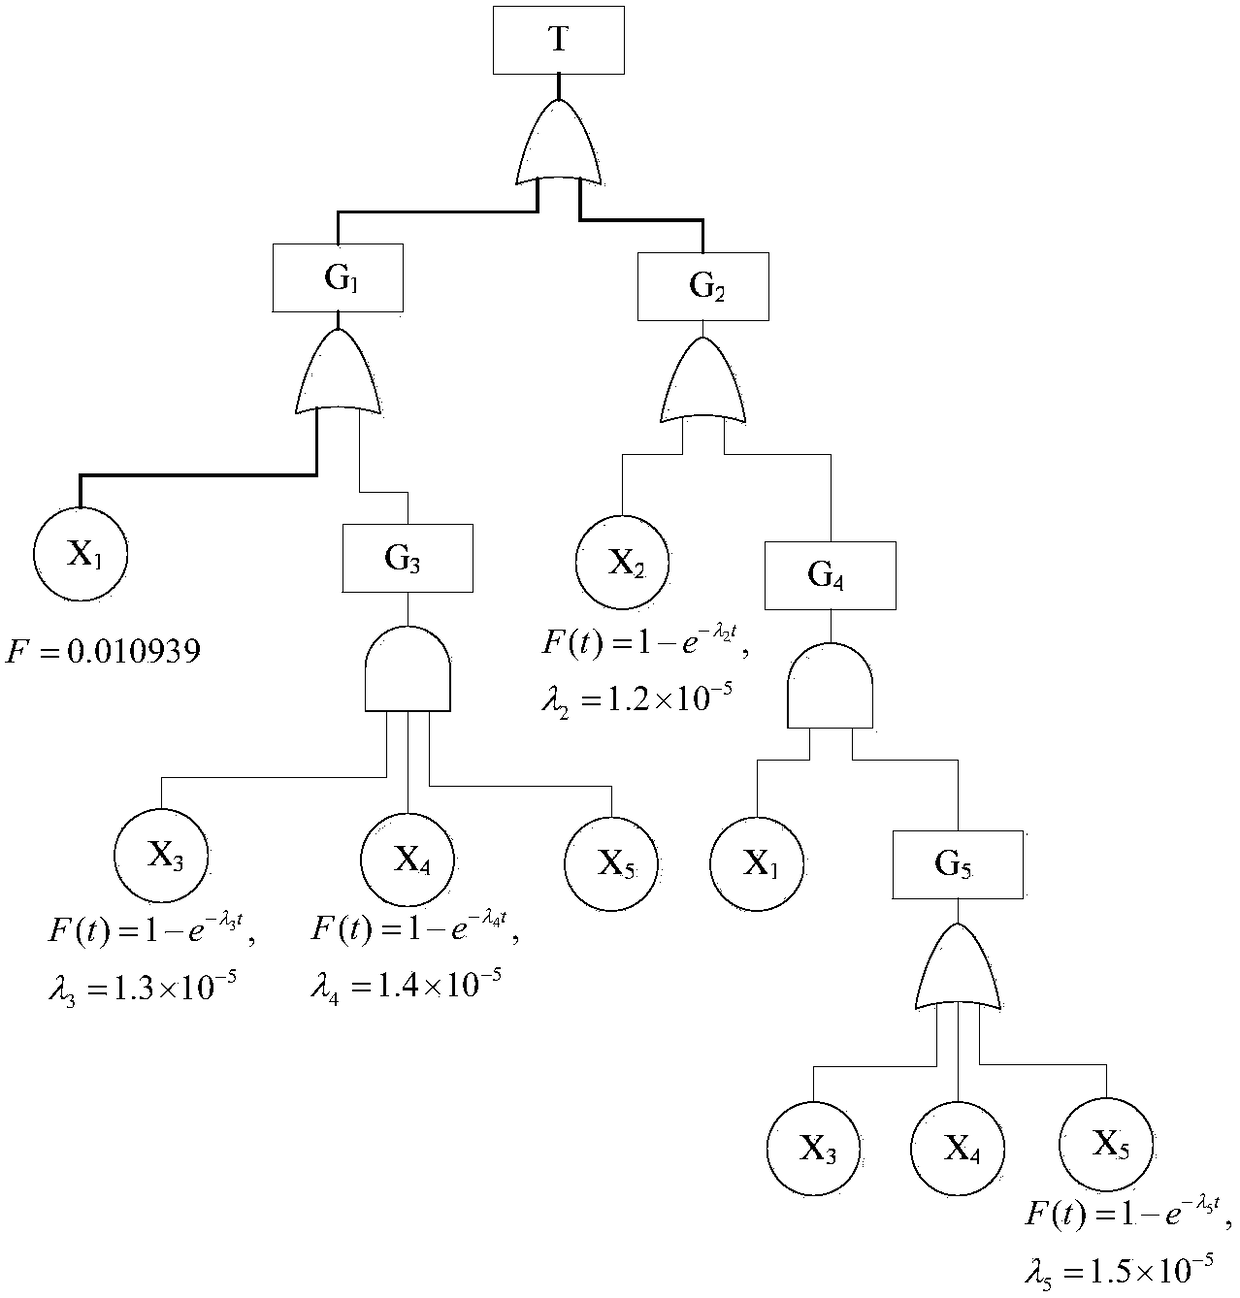 A Fault Tree Analysis Method Based on Monte Carlo Simulation